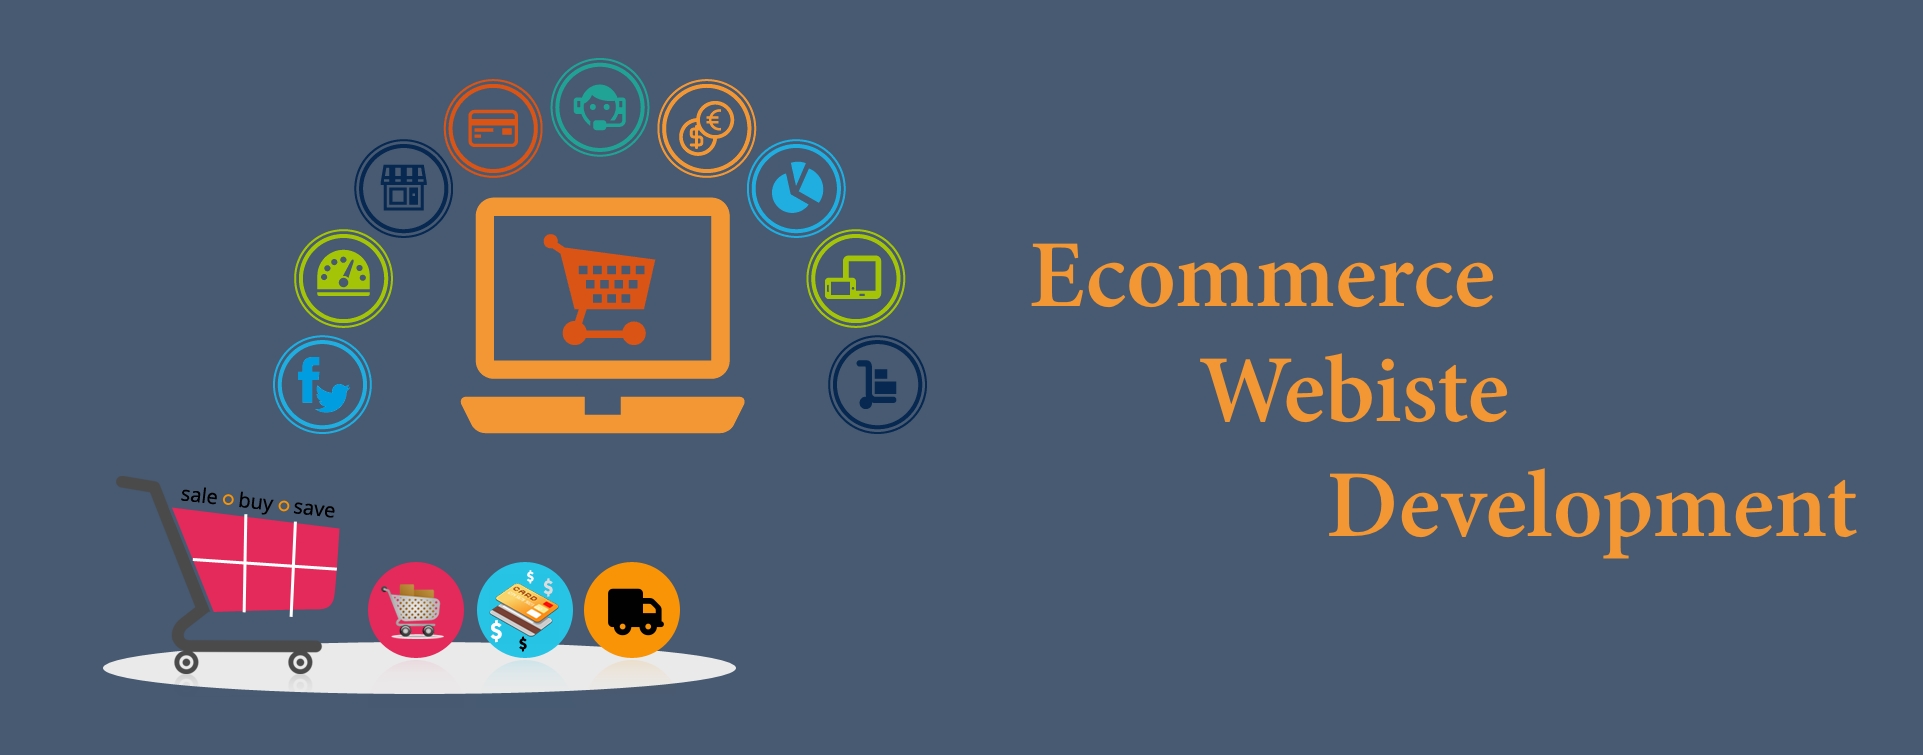 Ecommerce website Development